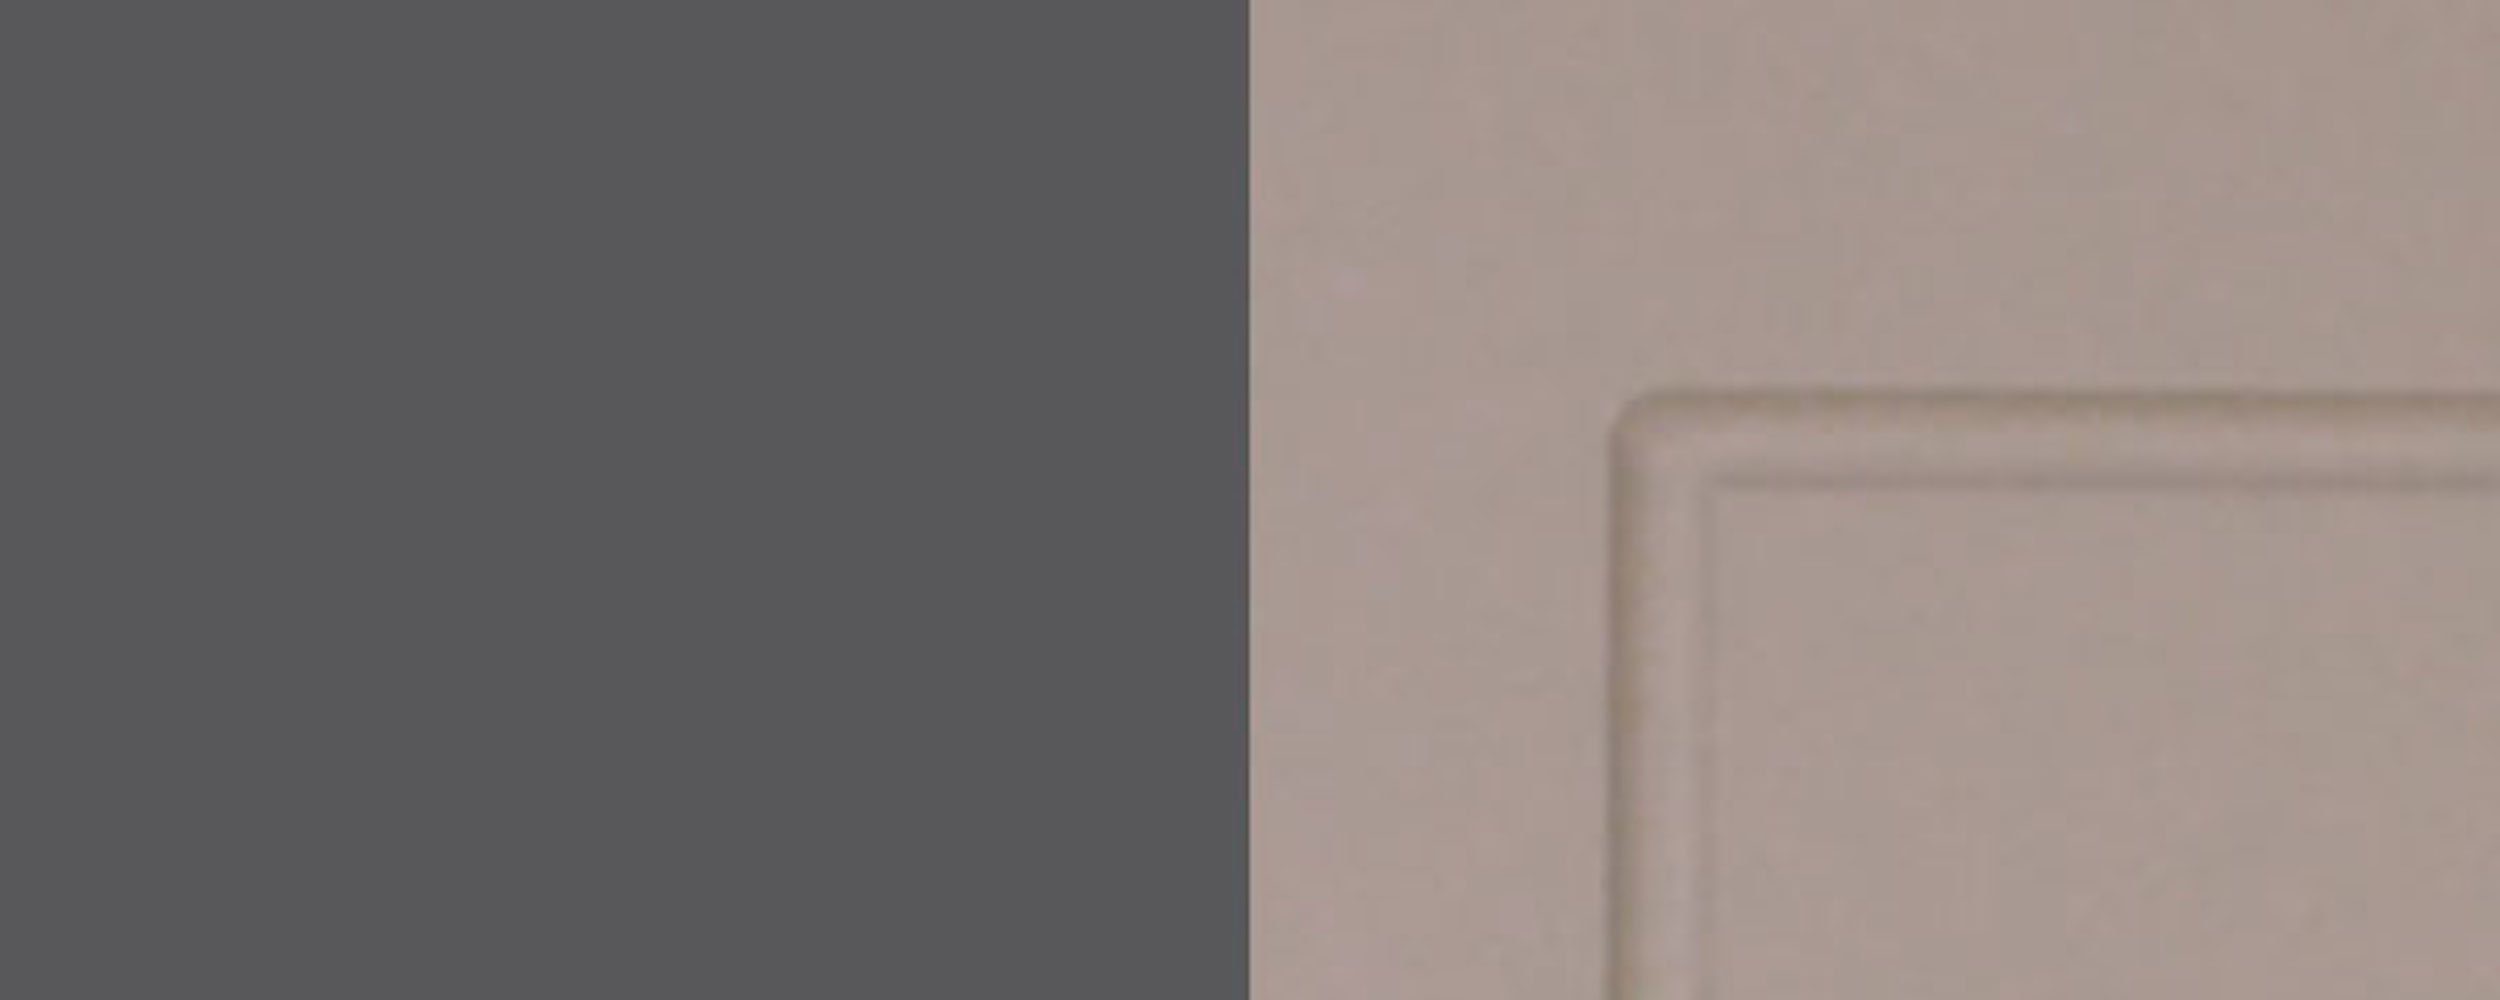 Front- beige Korpusfarbe 1-türig matt 60cm und Feldmann-Wohnen Unterschrank (Kvantum) Kvantum wählbar